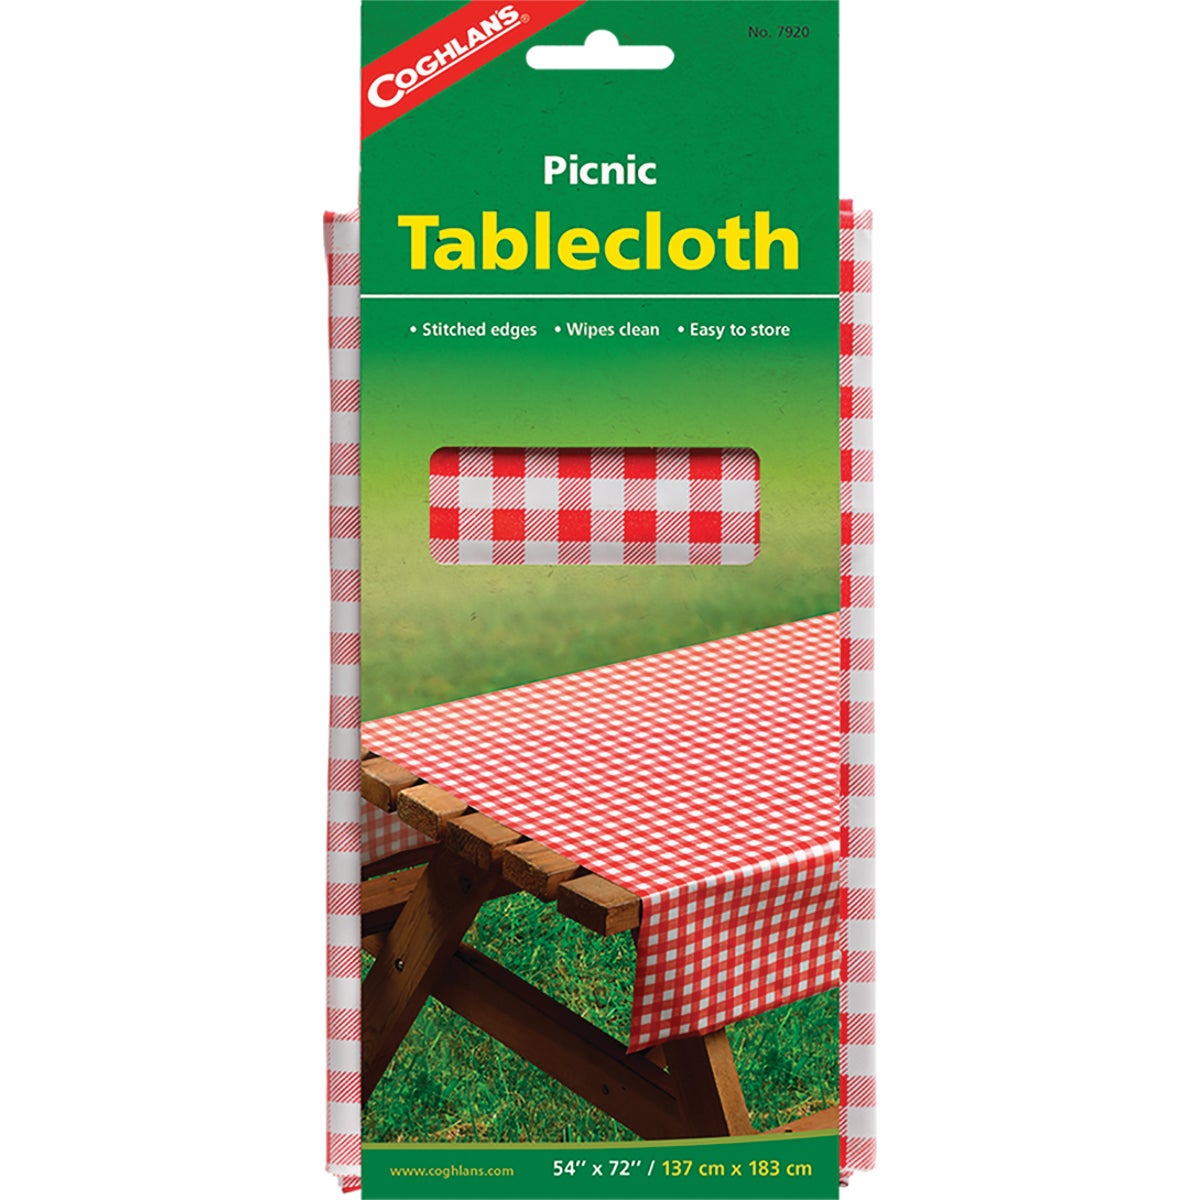 Item 705021, Outdoor picnic tablecloth.